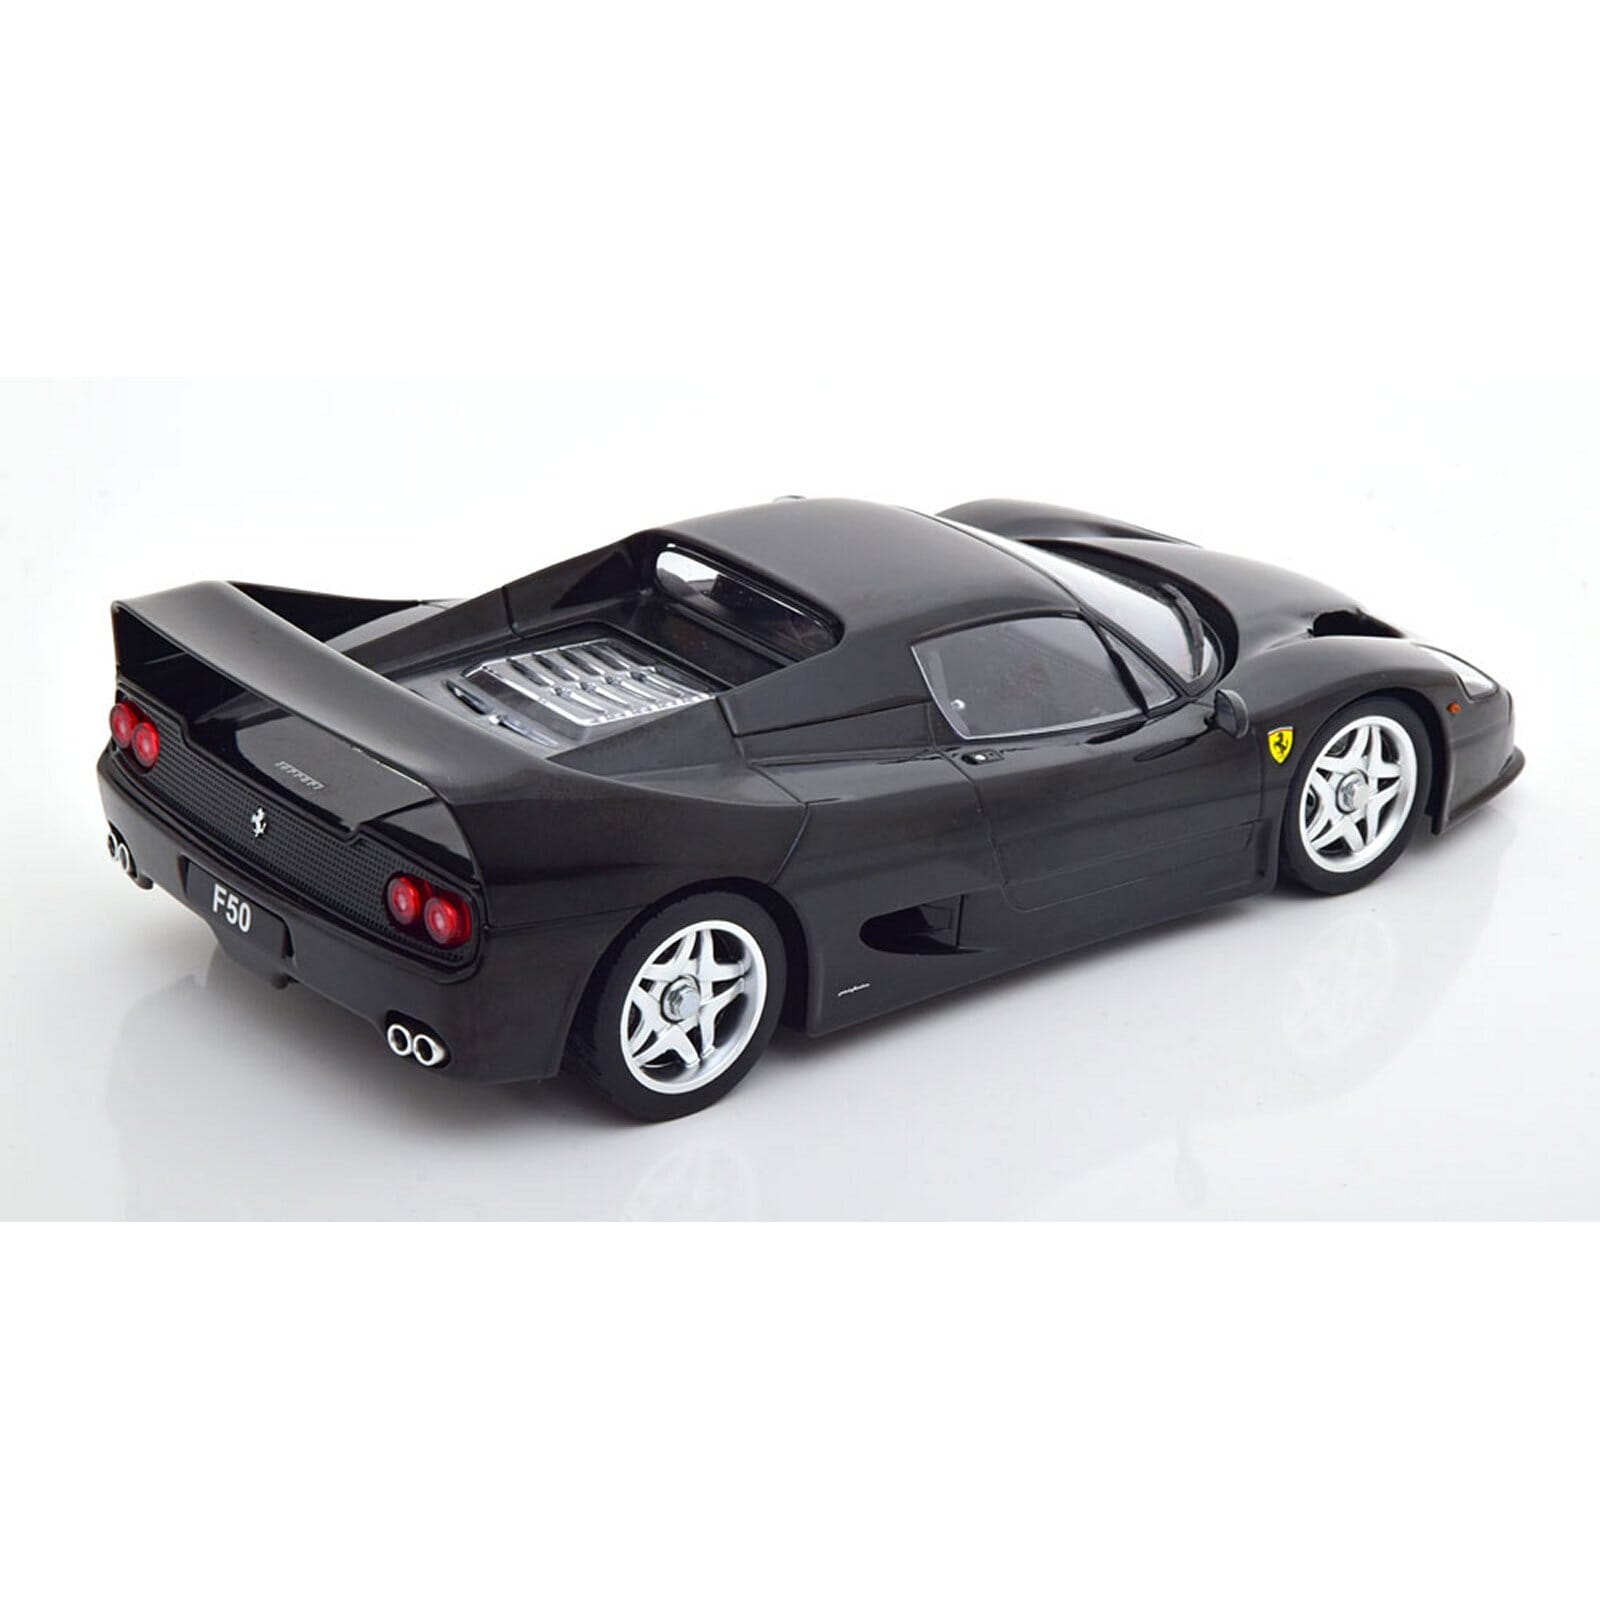 Ferrari F50 Hard Top Diecast Model 1:18 scale Black